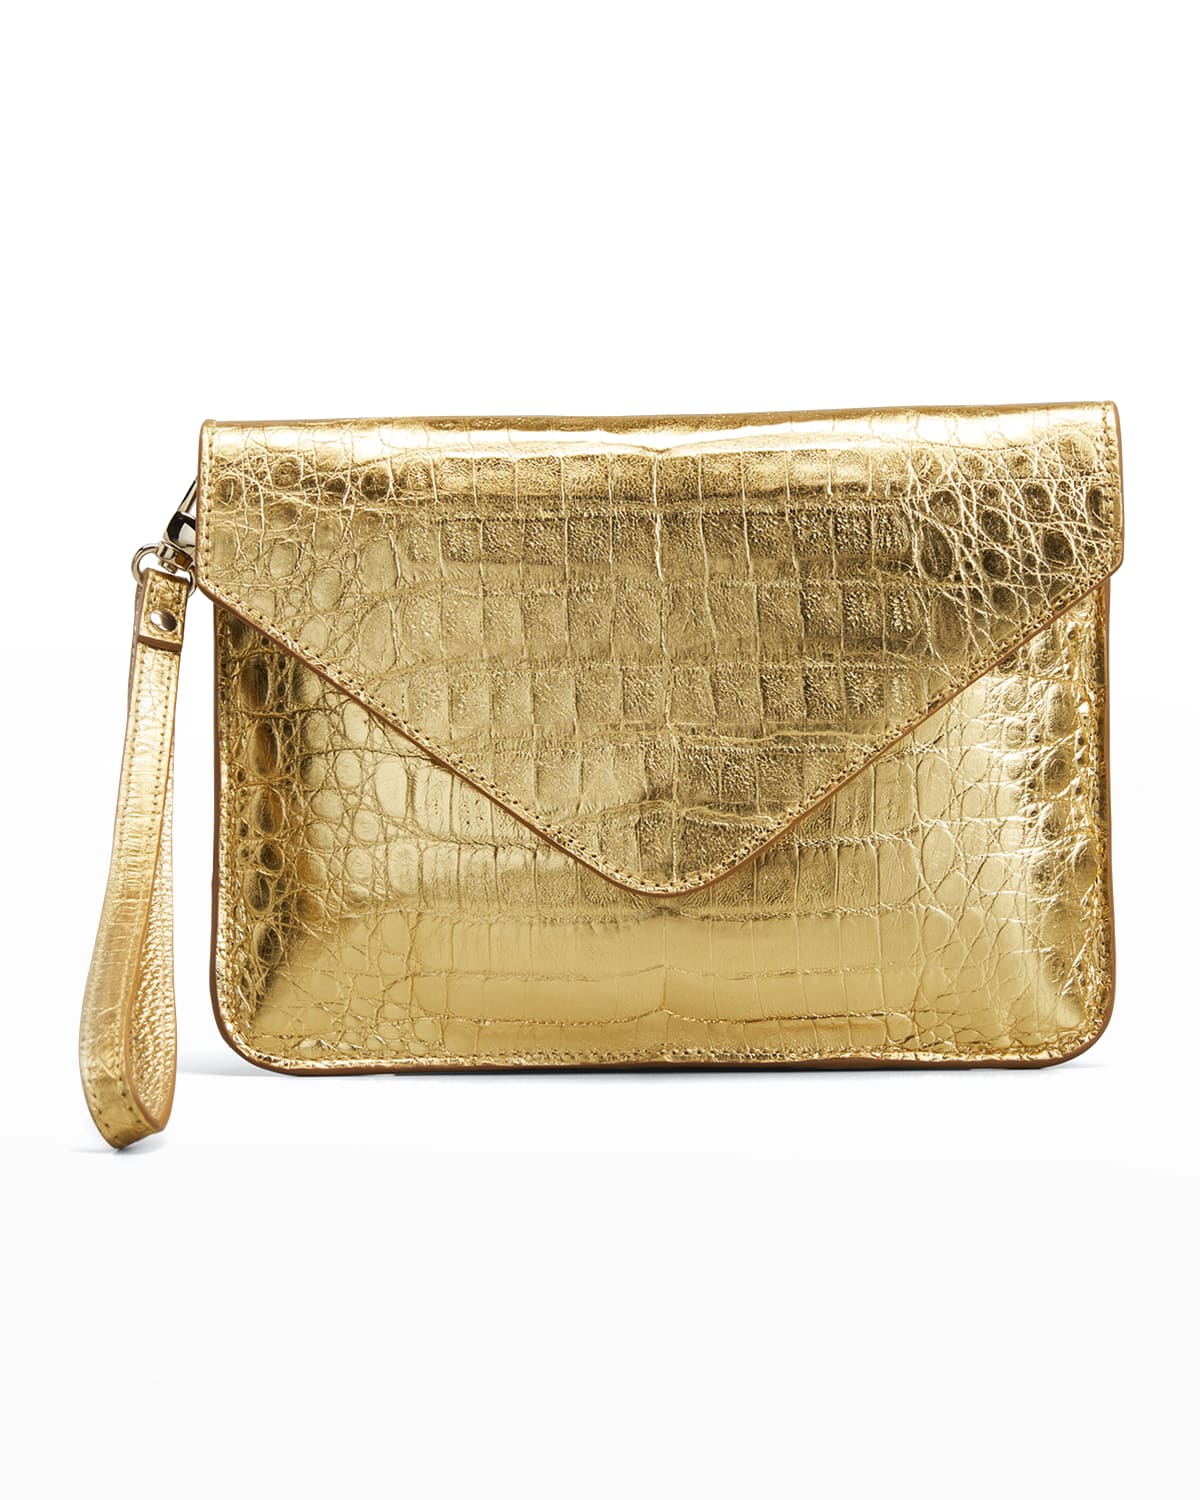 New Designer Faux Leather Clutch Bag Gold Trim Envelope Summer Purse Party Retro 